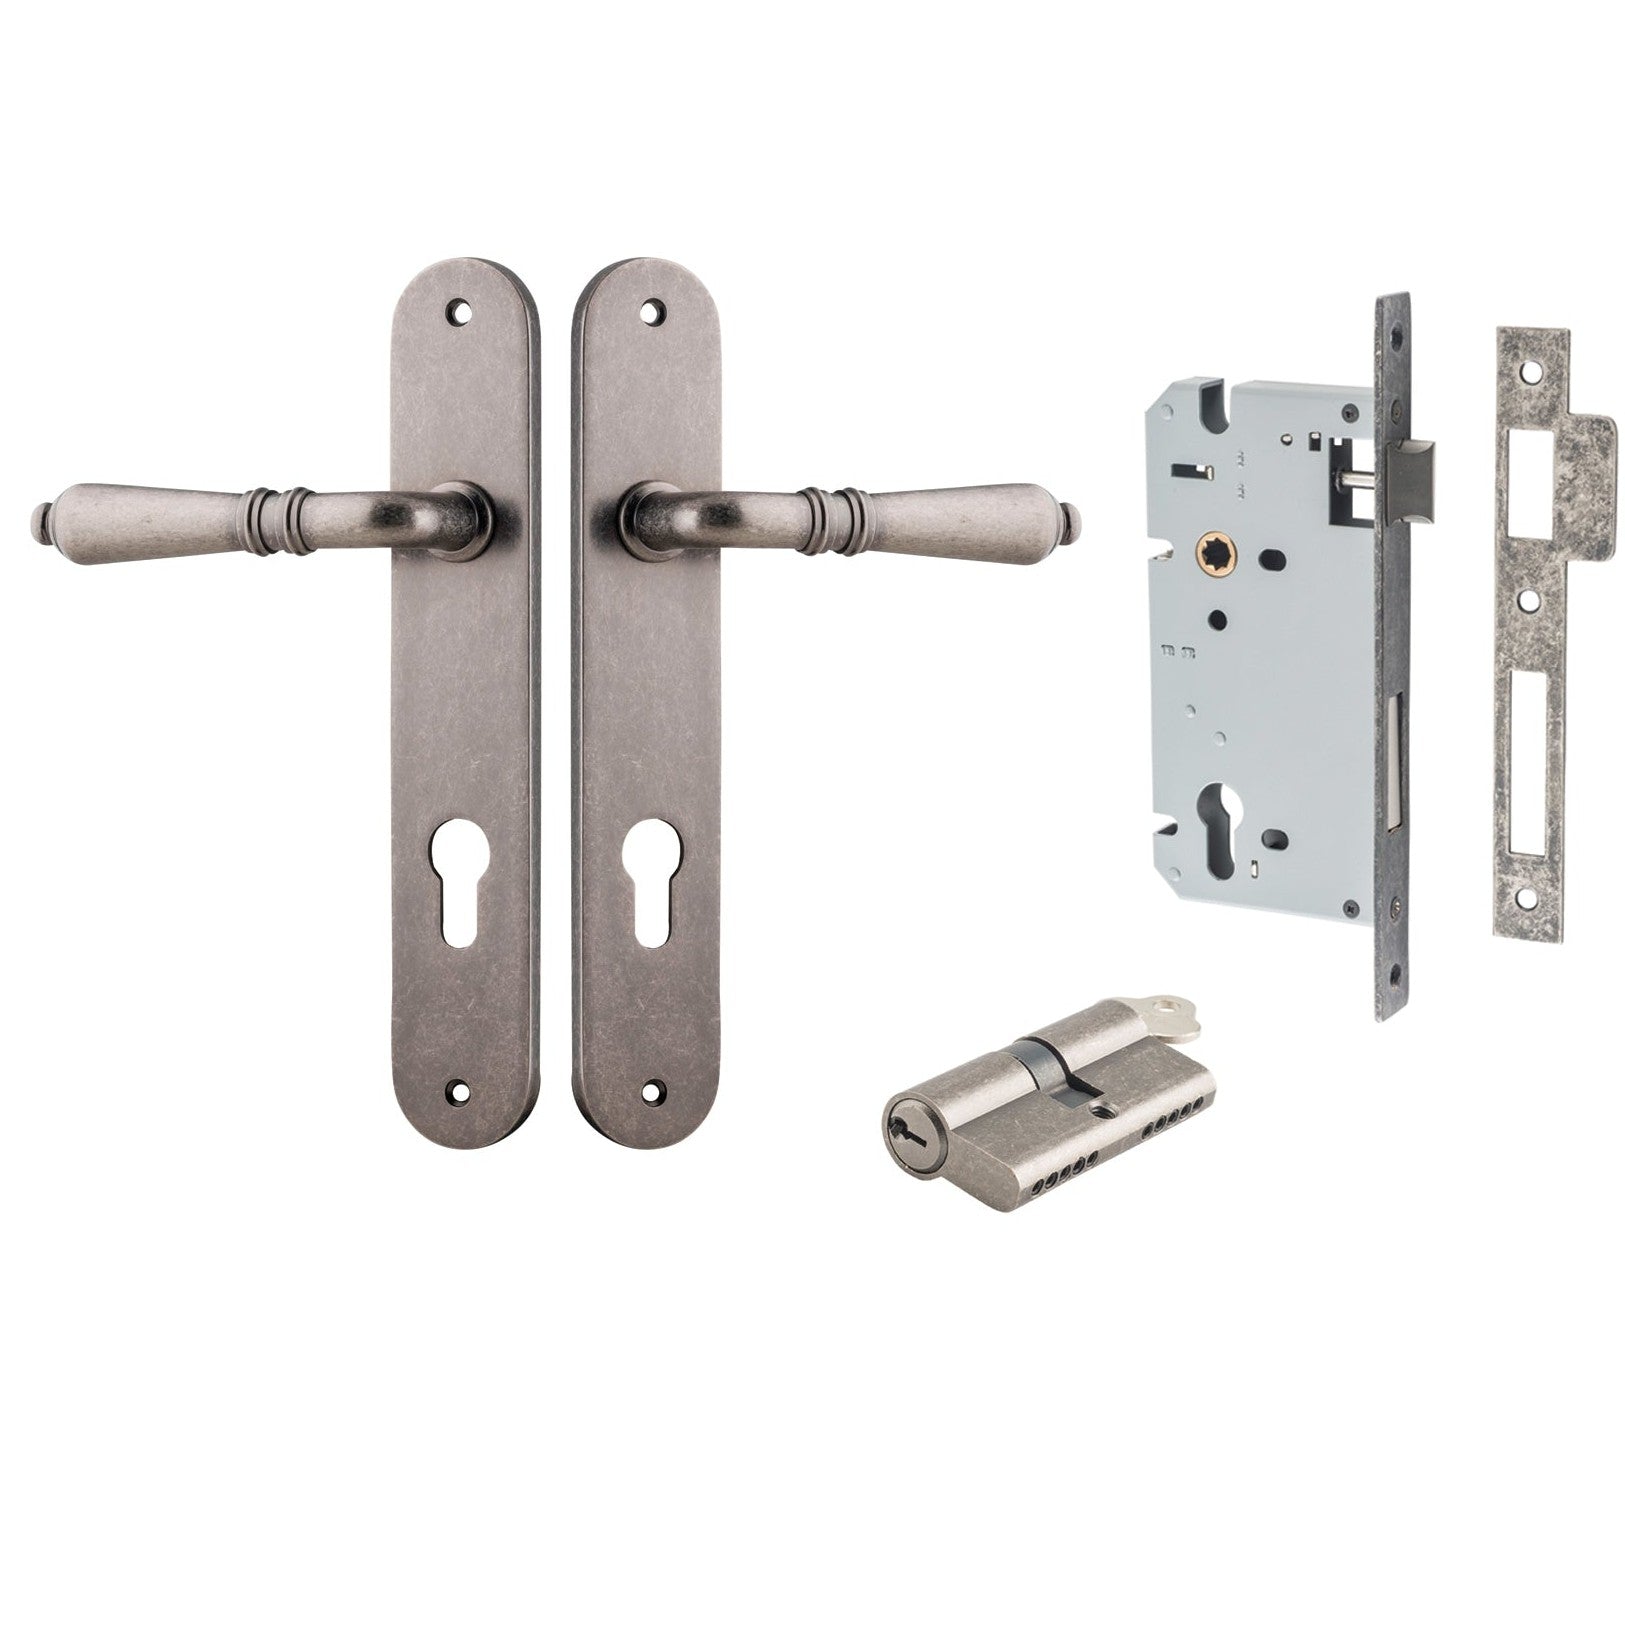 Iver Door Handle Sarlat Oval Euro Key/Key Distressed Nickel Entrance Kit